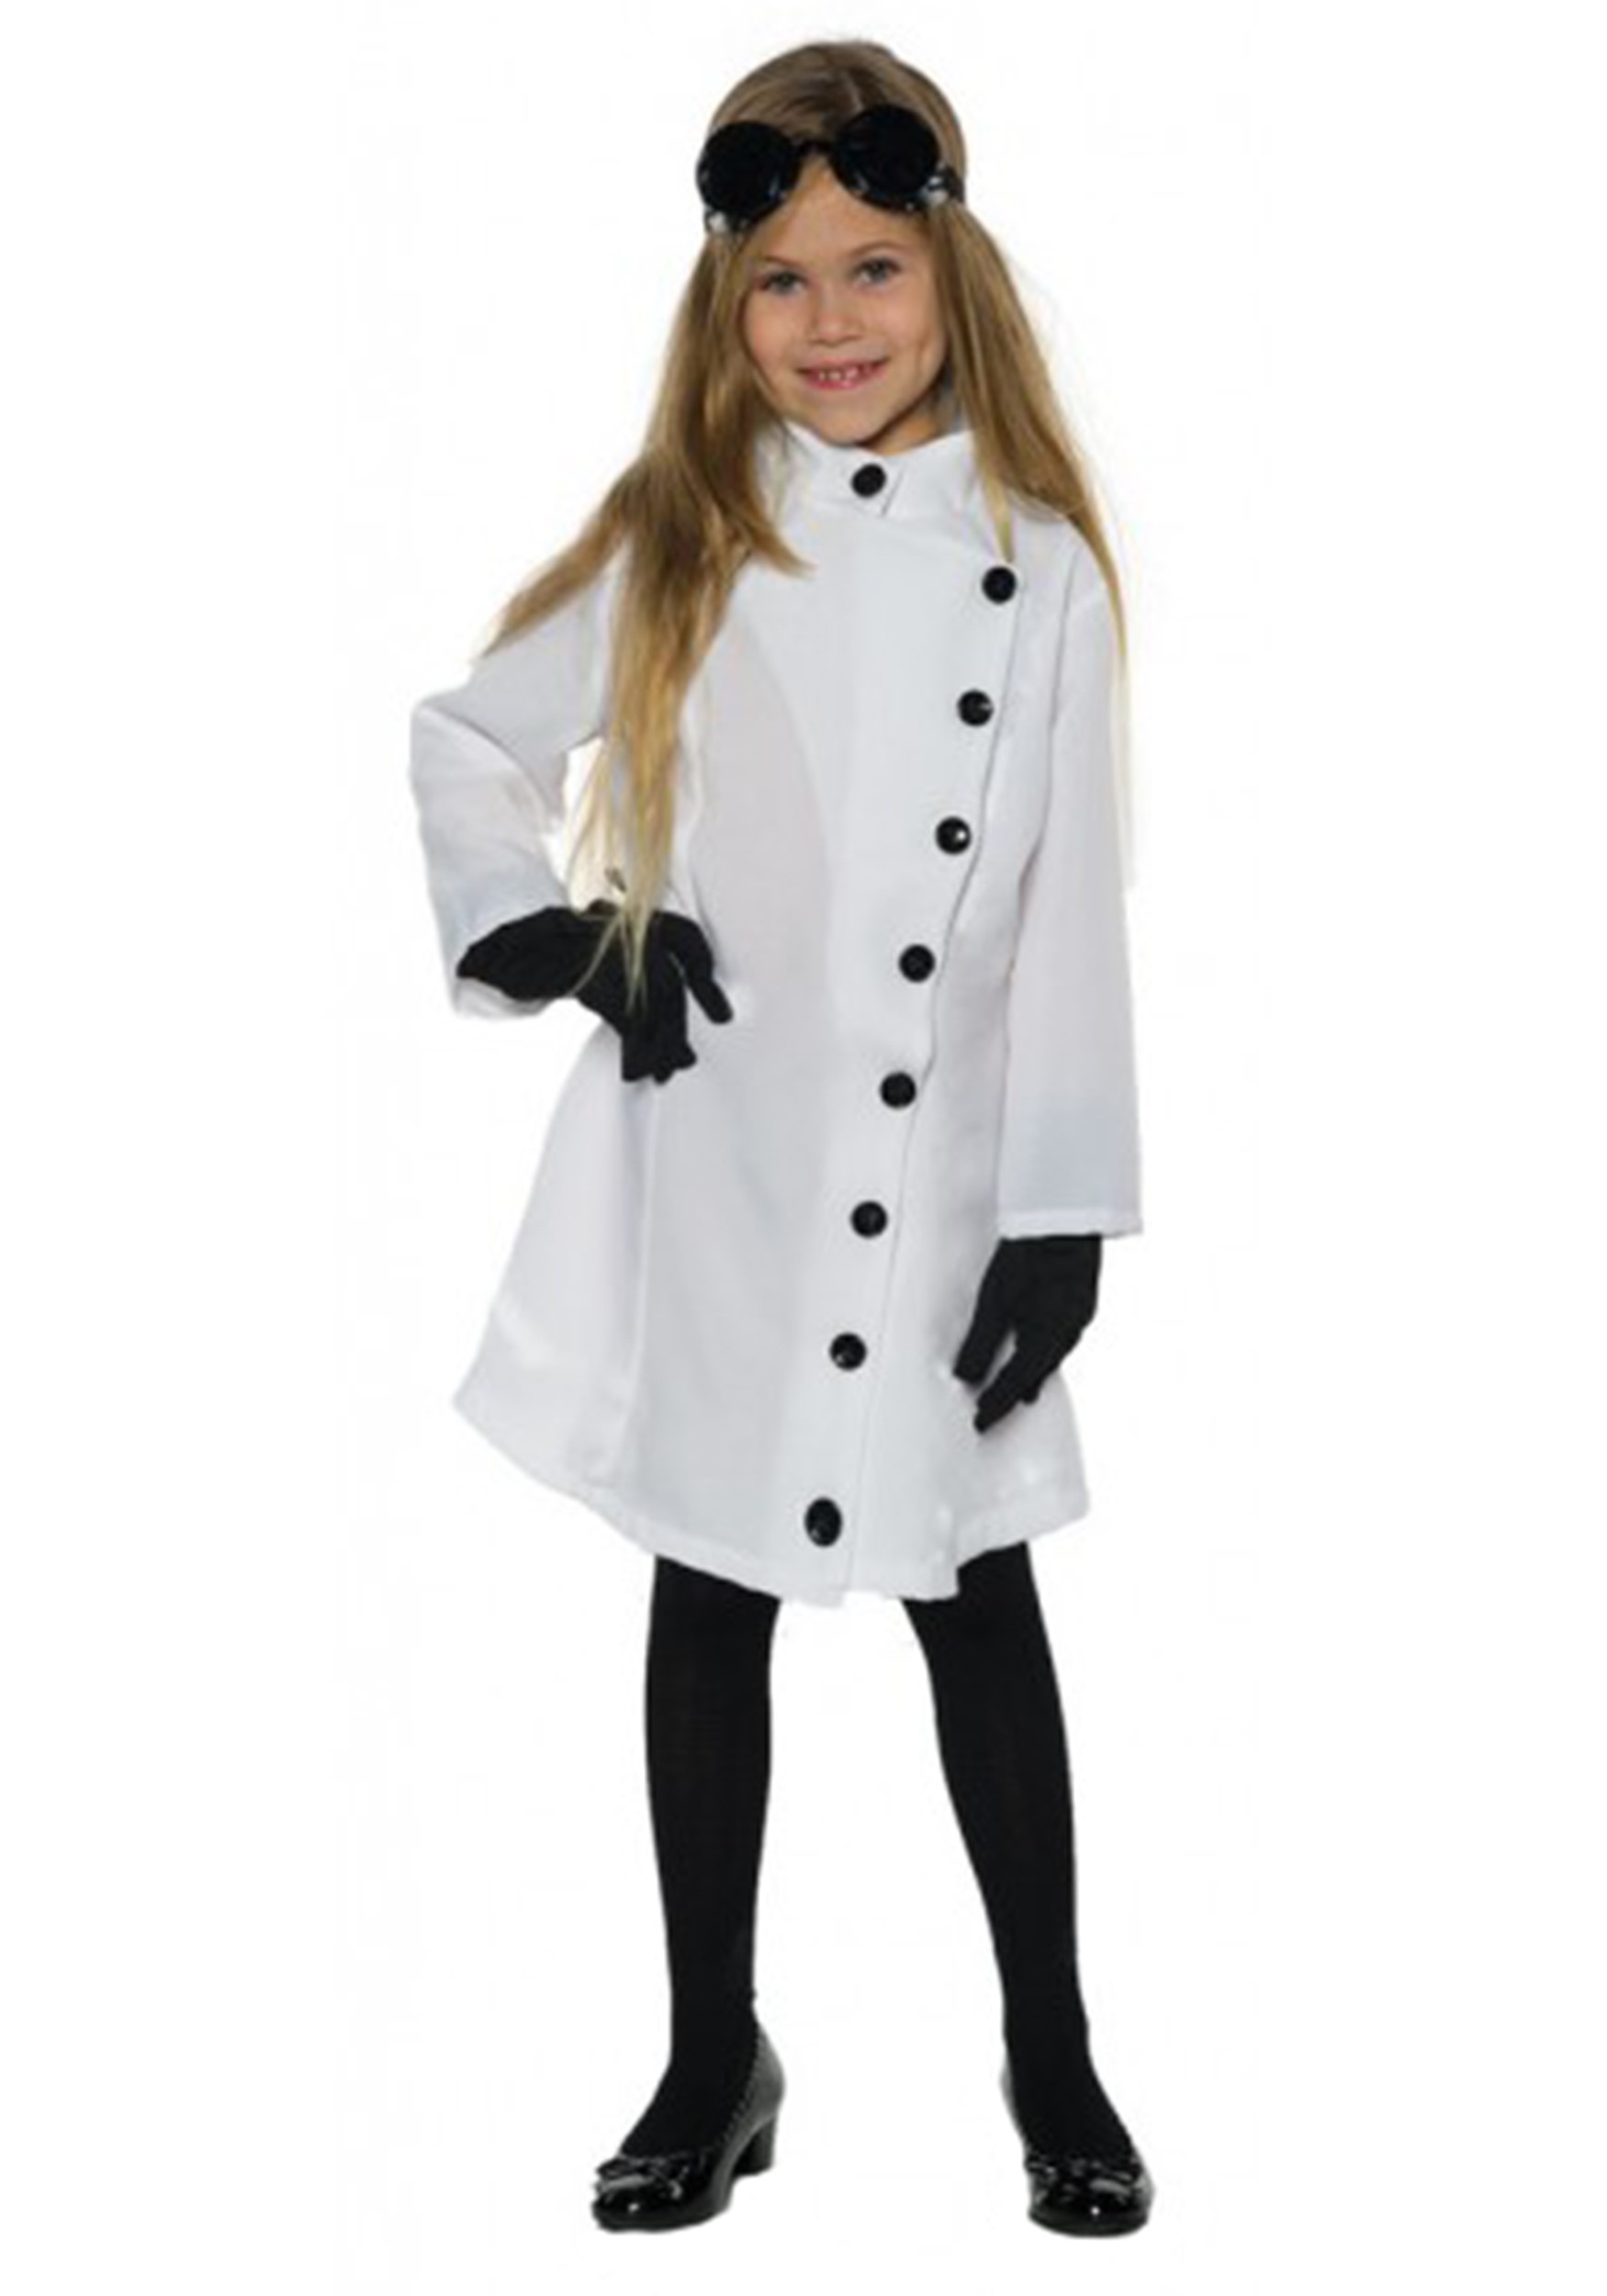 Photos - Fancy Dress MAD Underwraps  Scientist Costume for Girls Black/White UN27593 